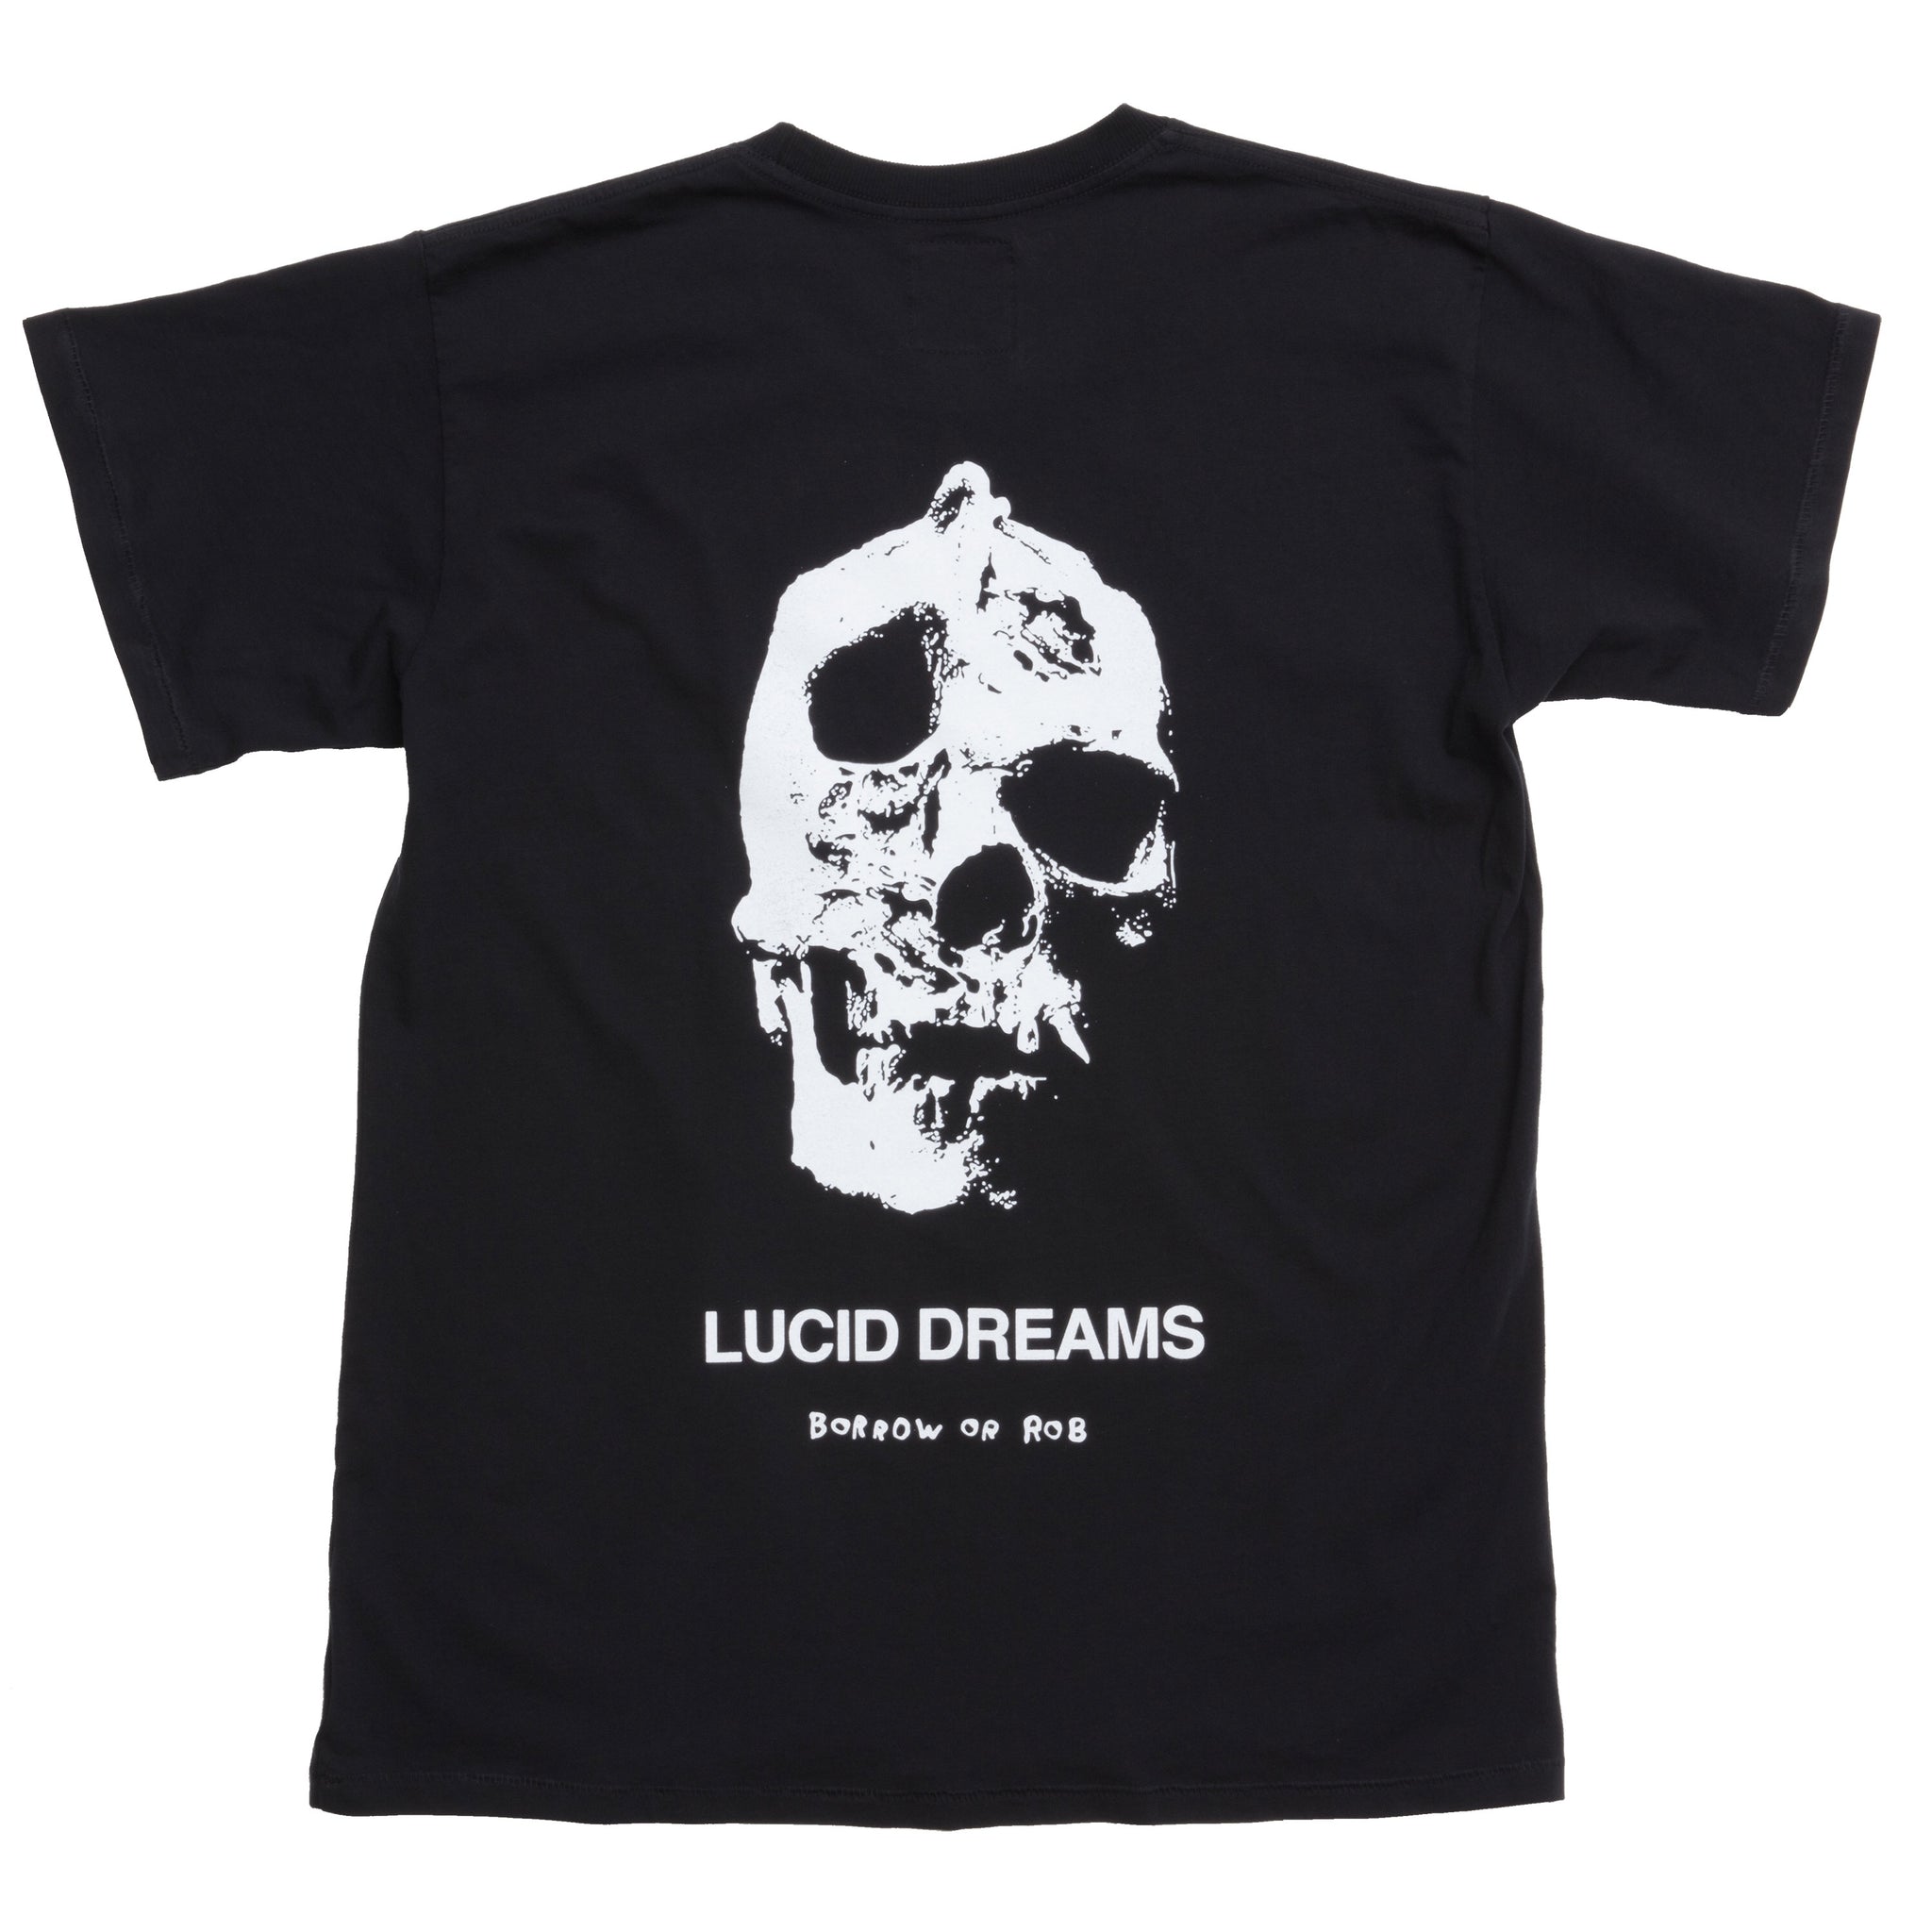 LUCID DREAMS T-SHIRT